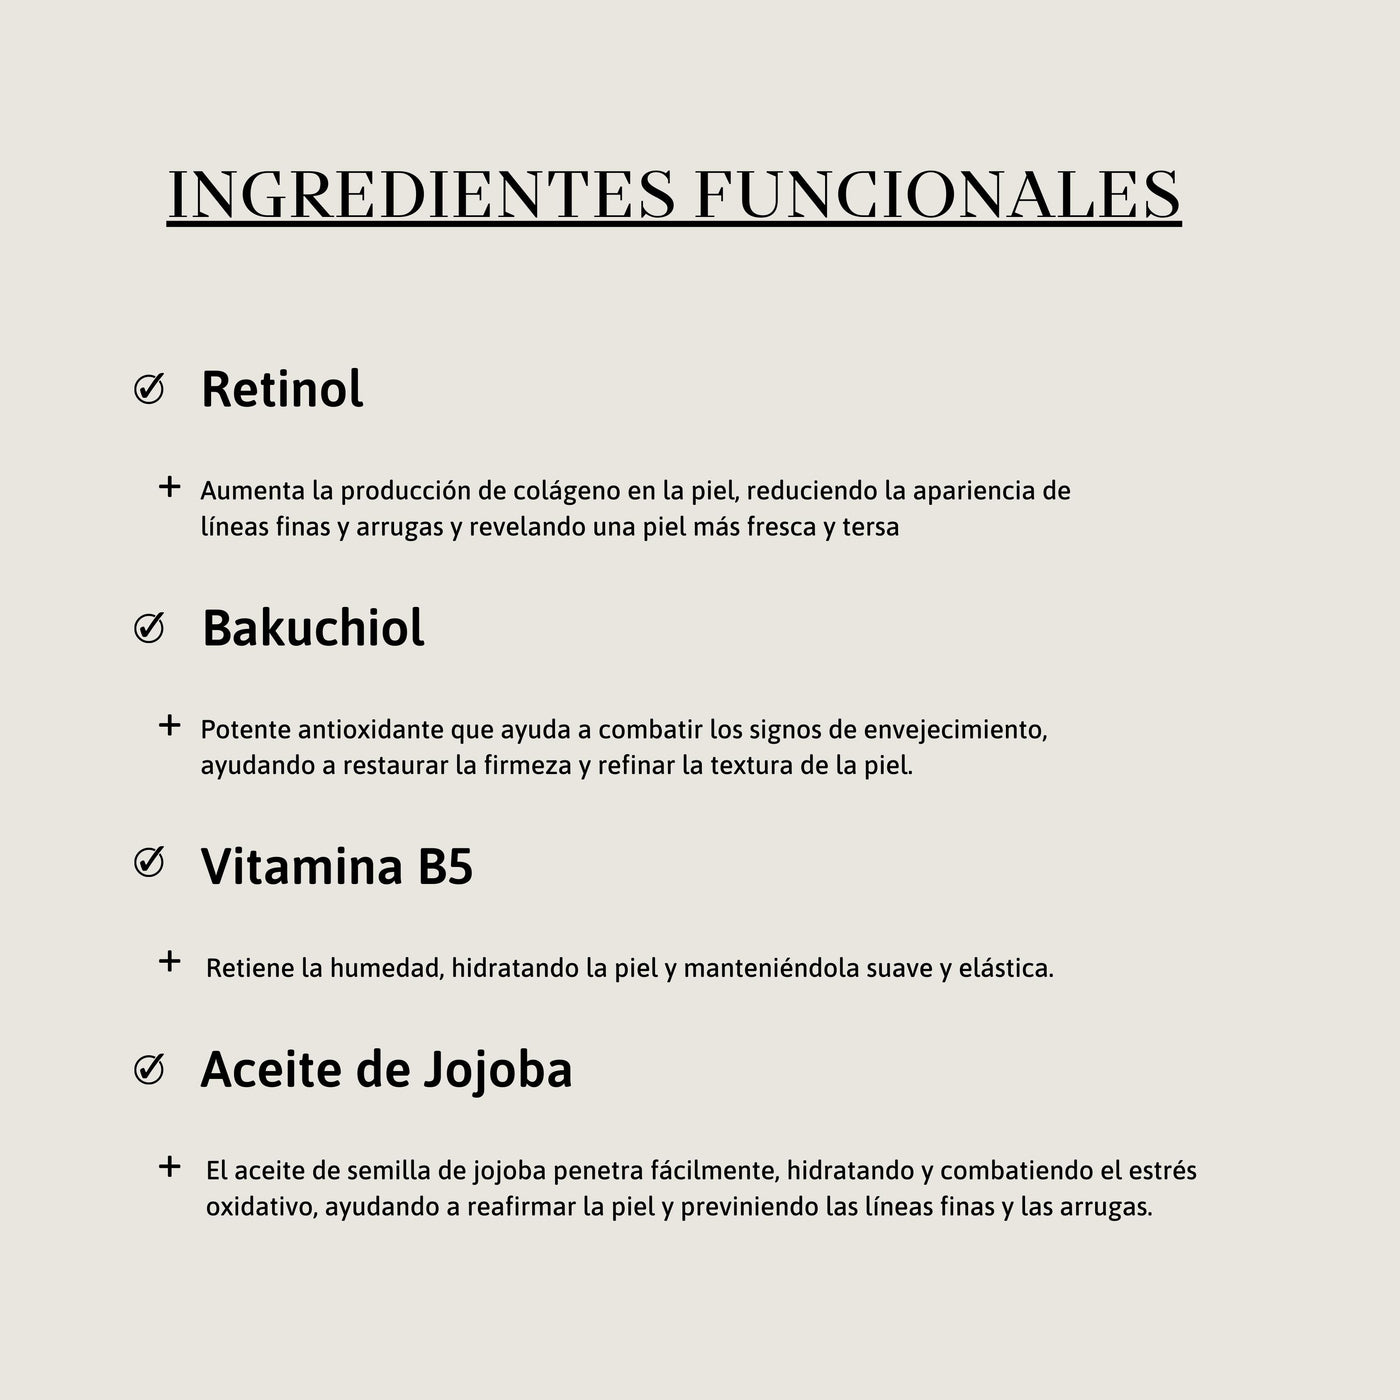 Retinol, Bakuchiol, Vitamina B5, Aceite de Jojoba.